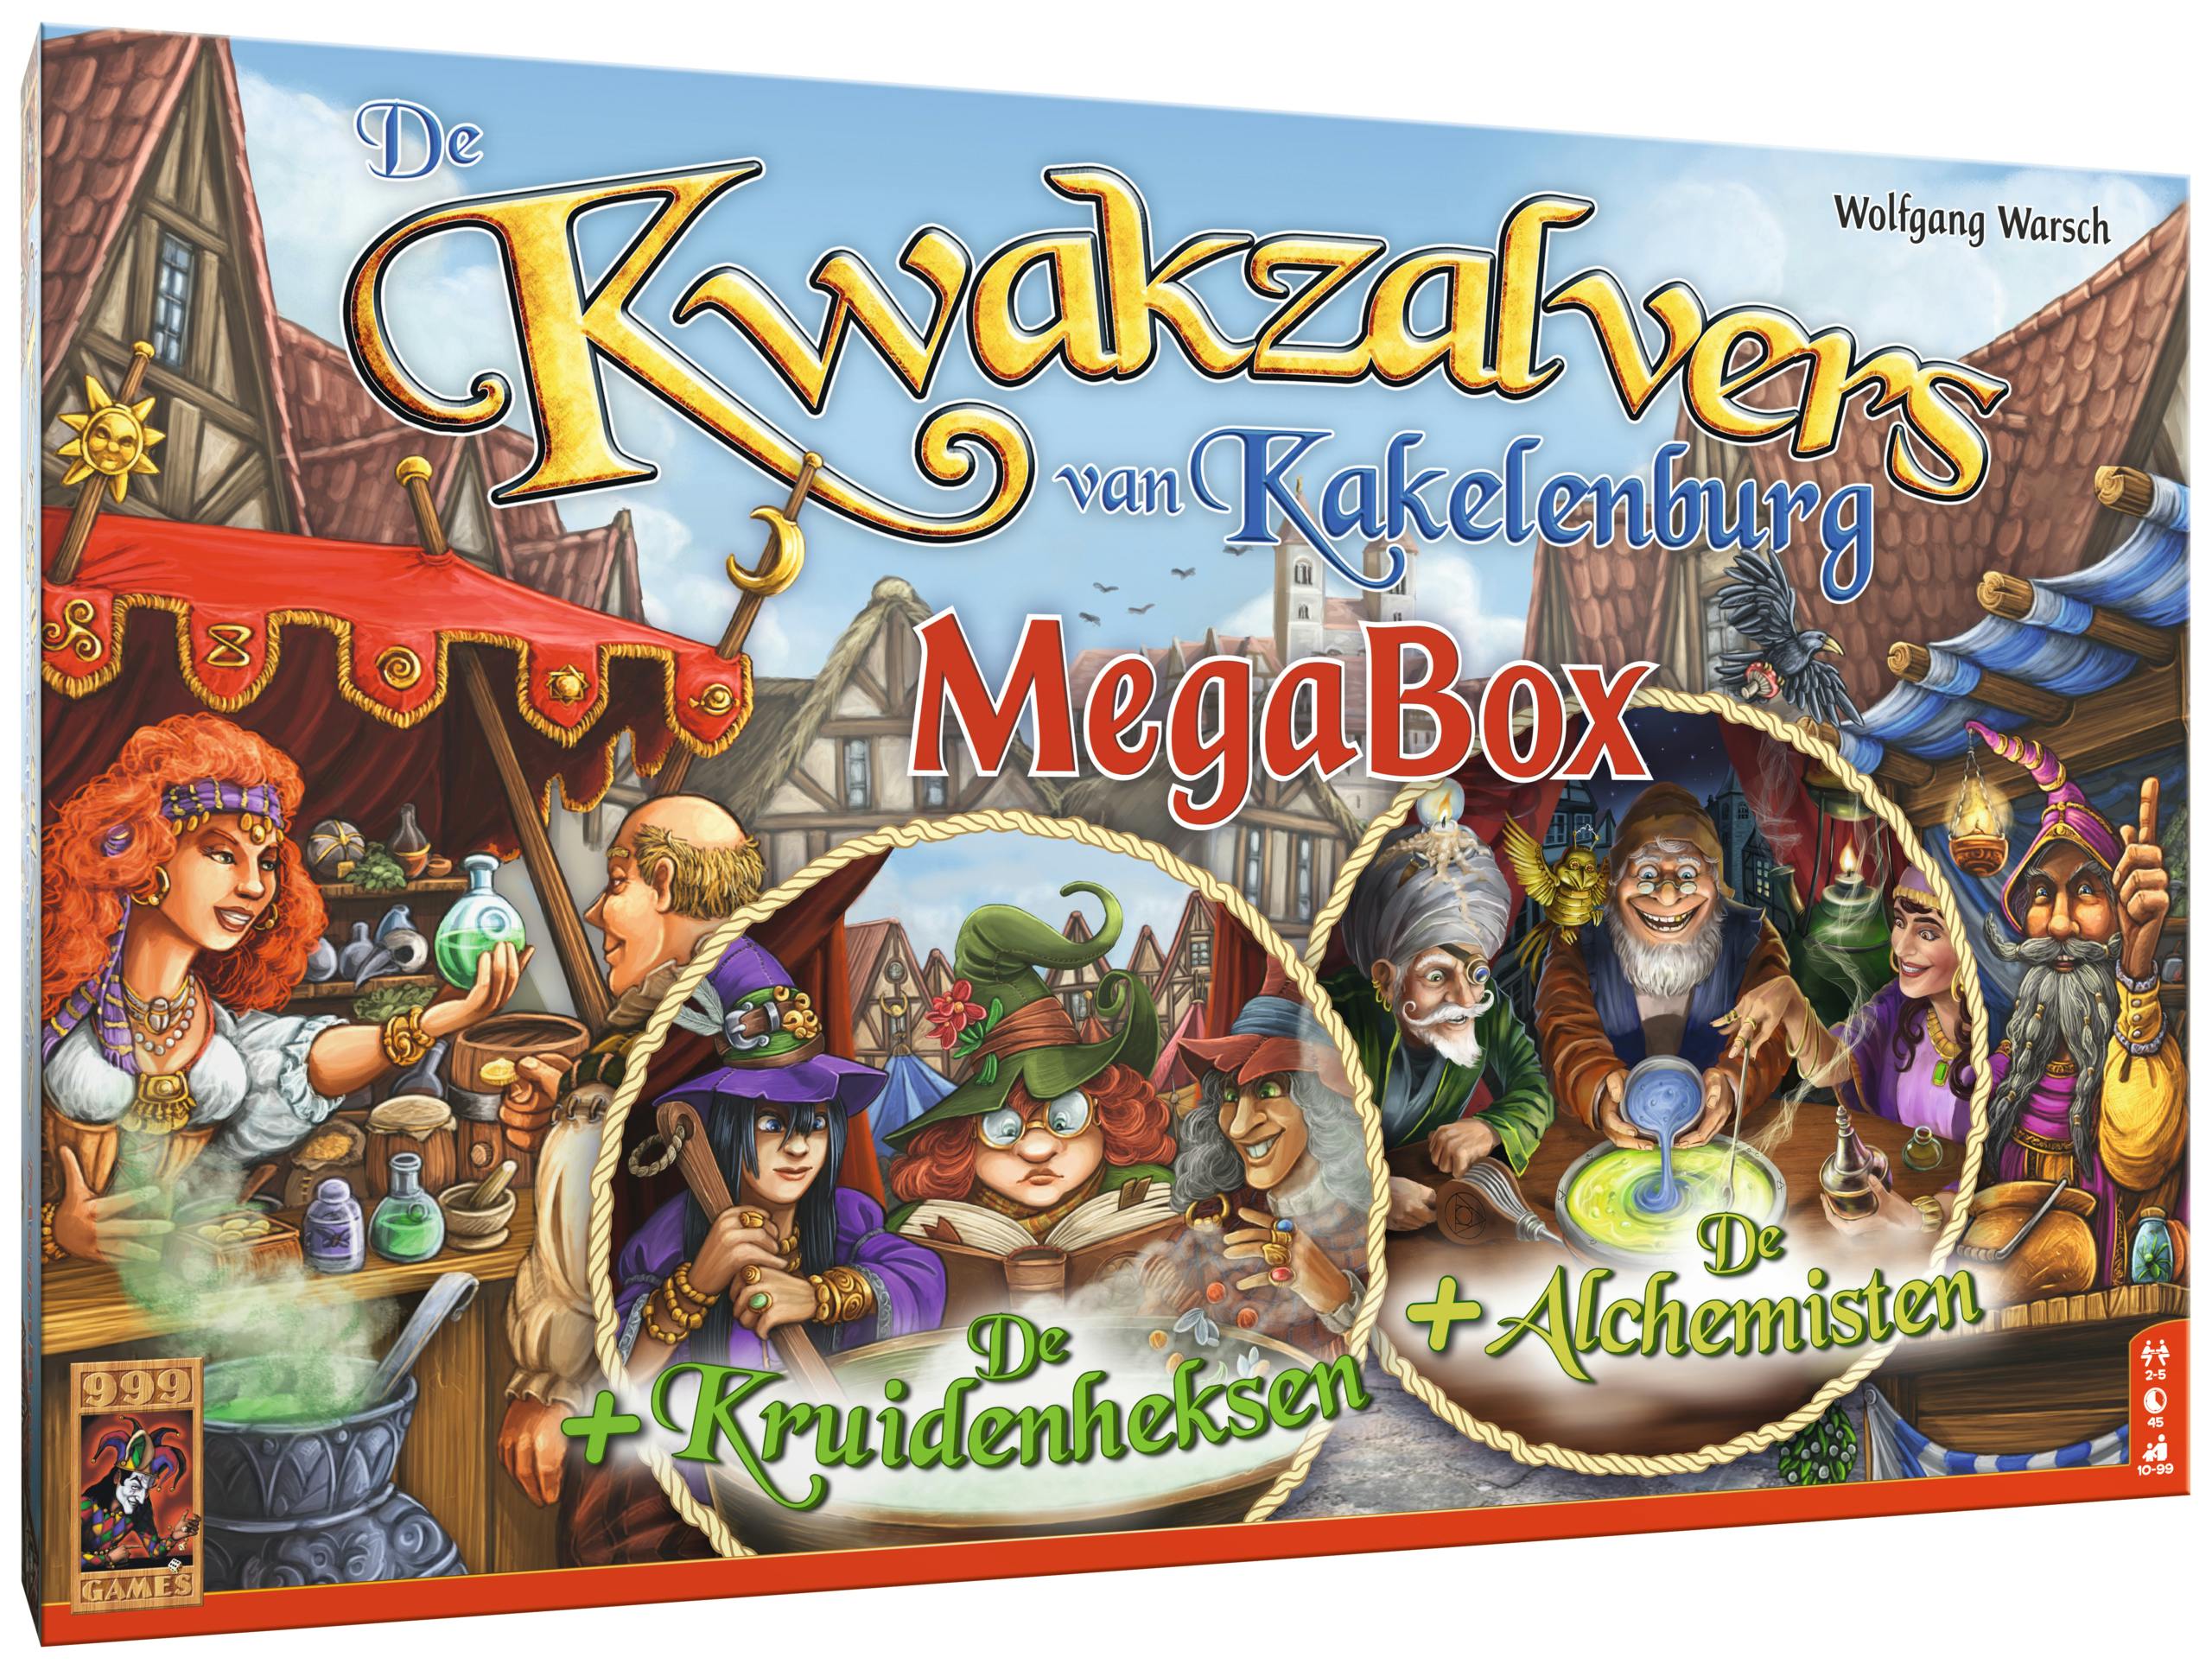 De Kwakzalvers van Kakelenburg Megabox